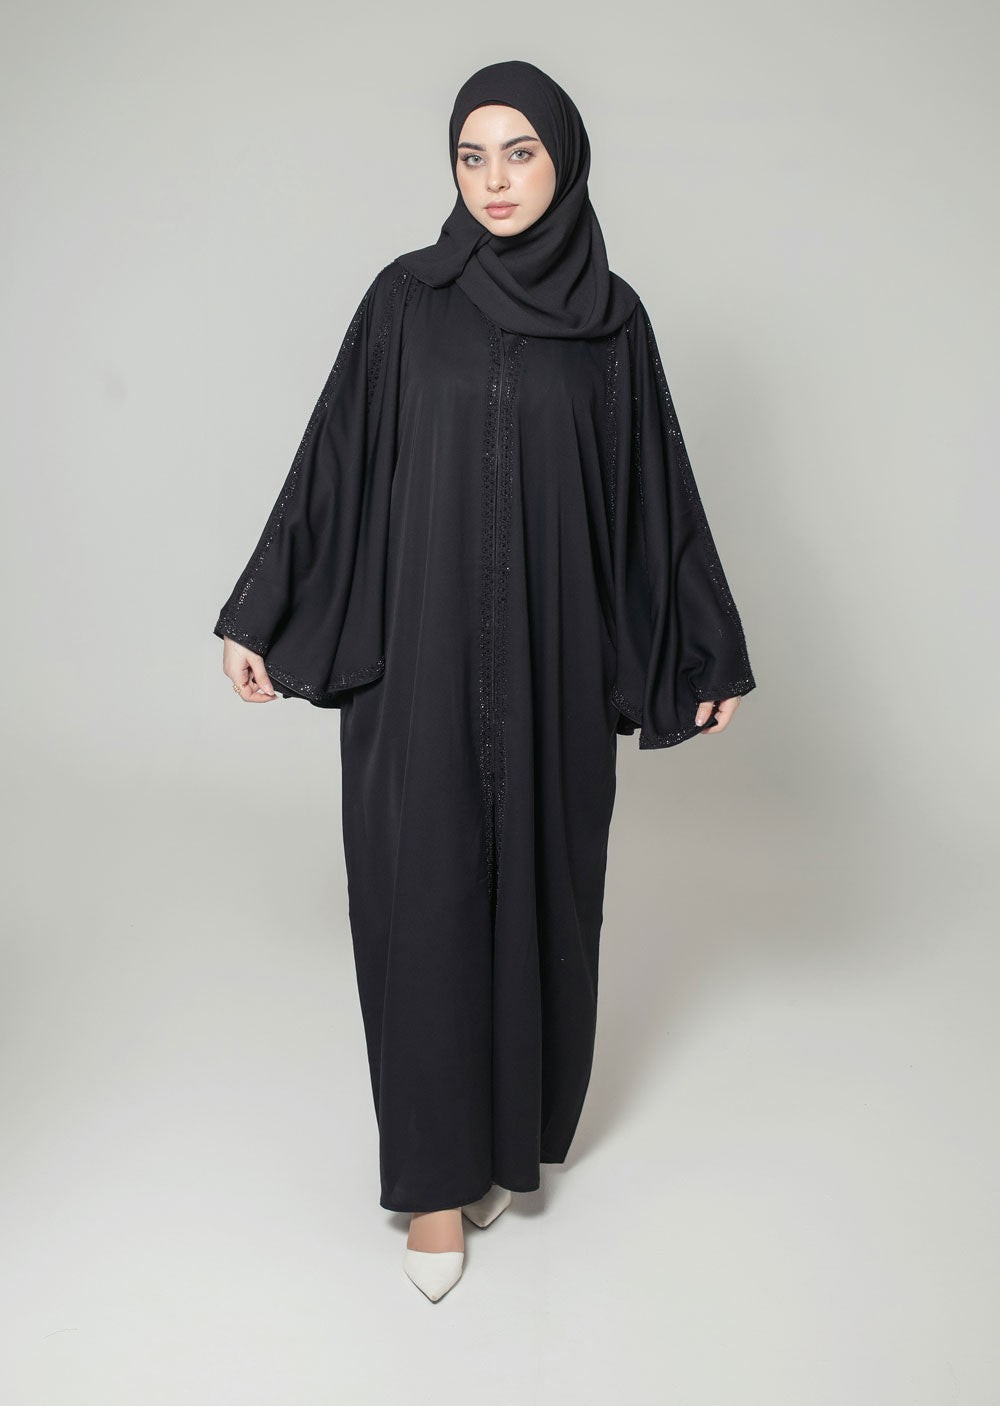 DSL-08 Laraib - Black Jacket Style Abaya Set - Memsaab Online